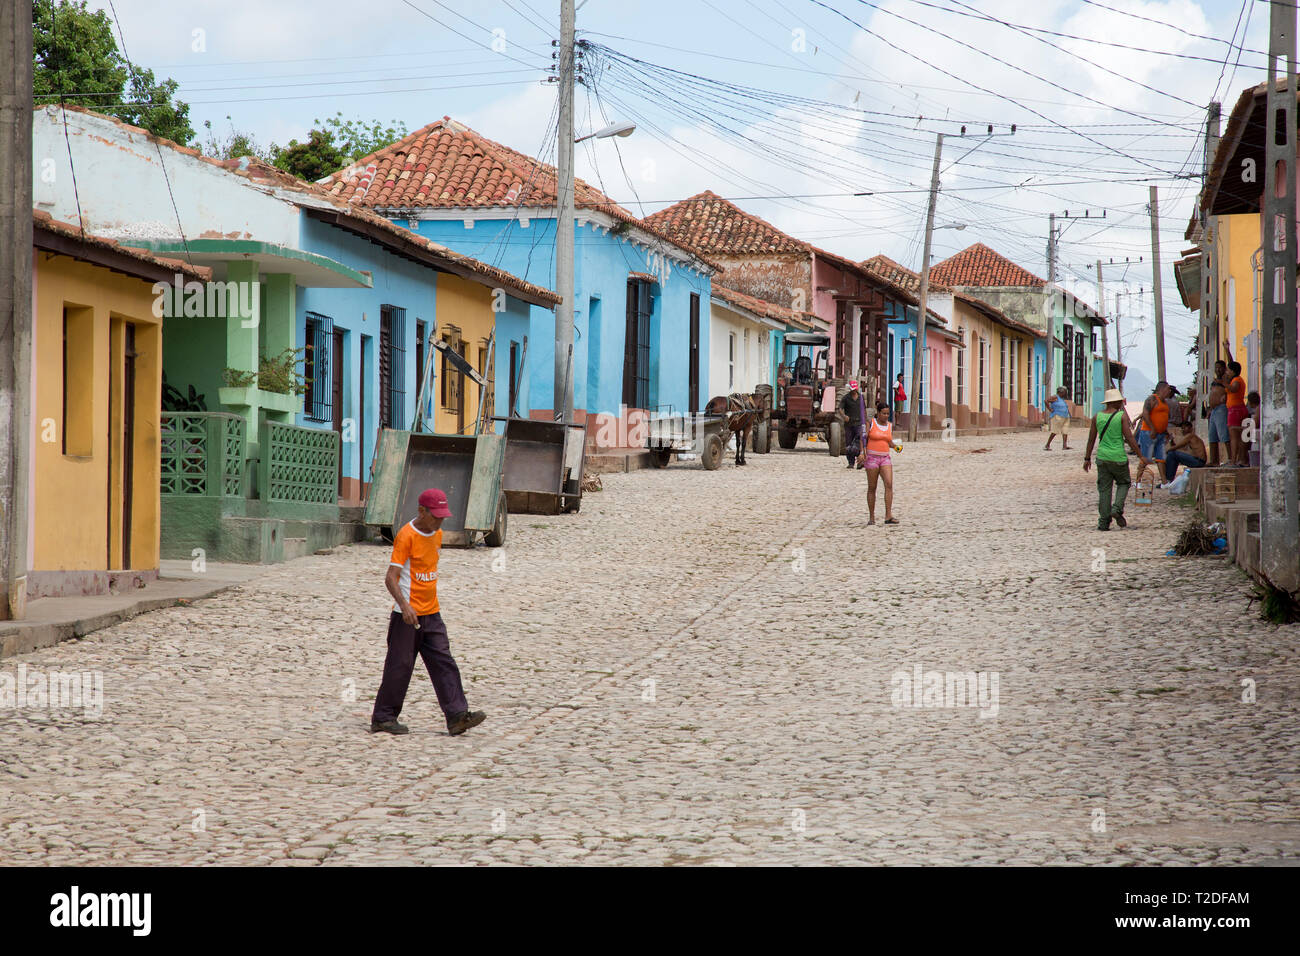 Cobbled street scene Trinidad,Cuba Stock Photo